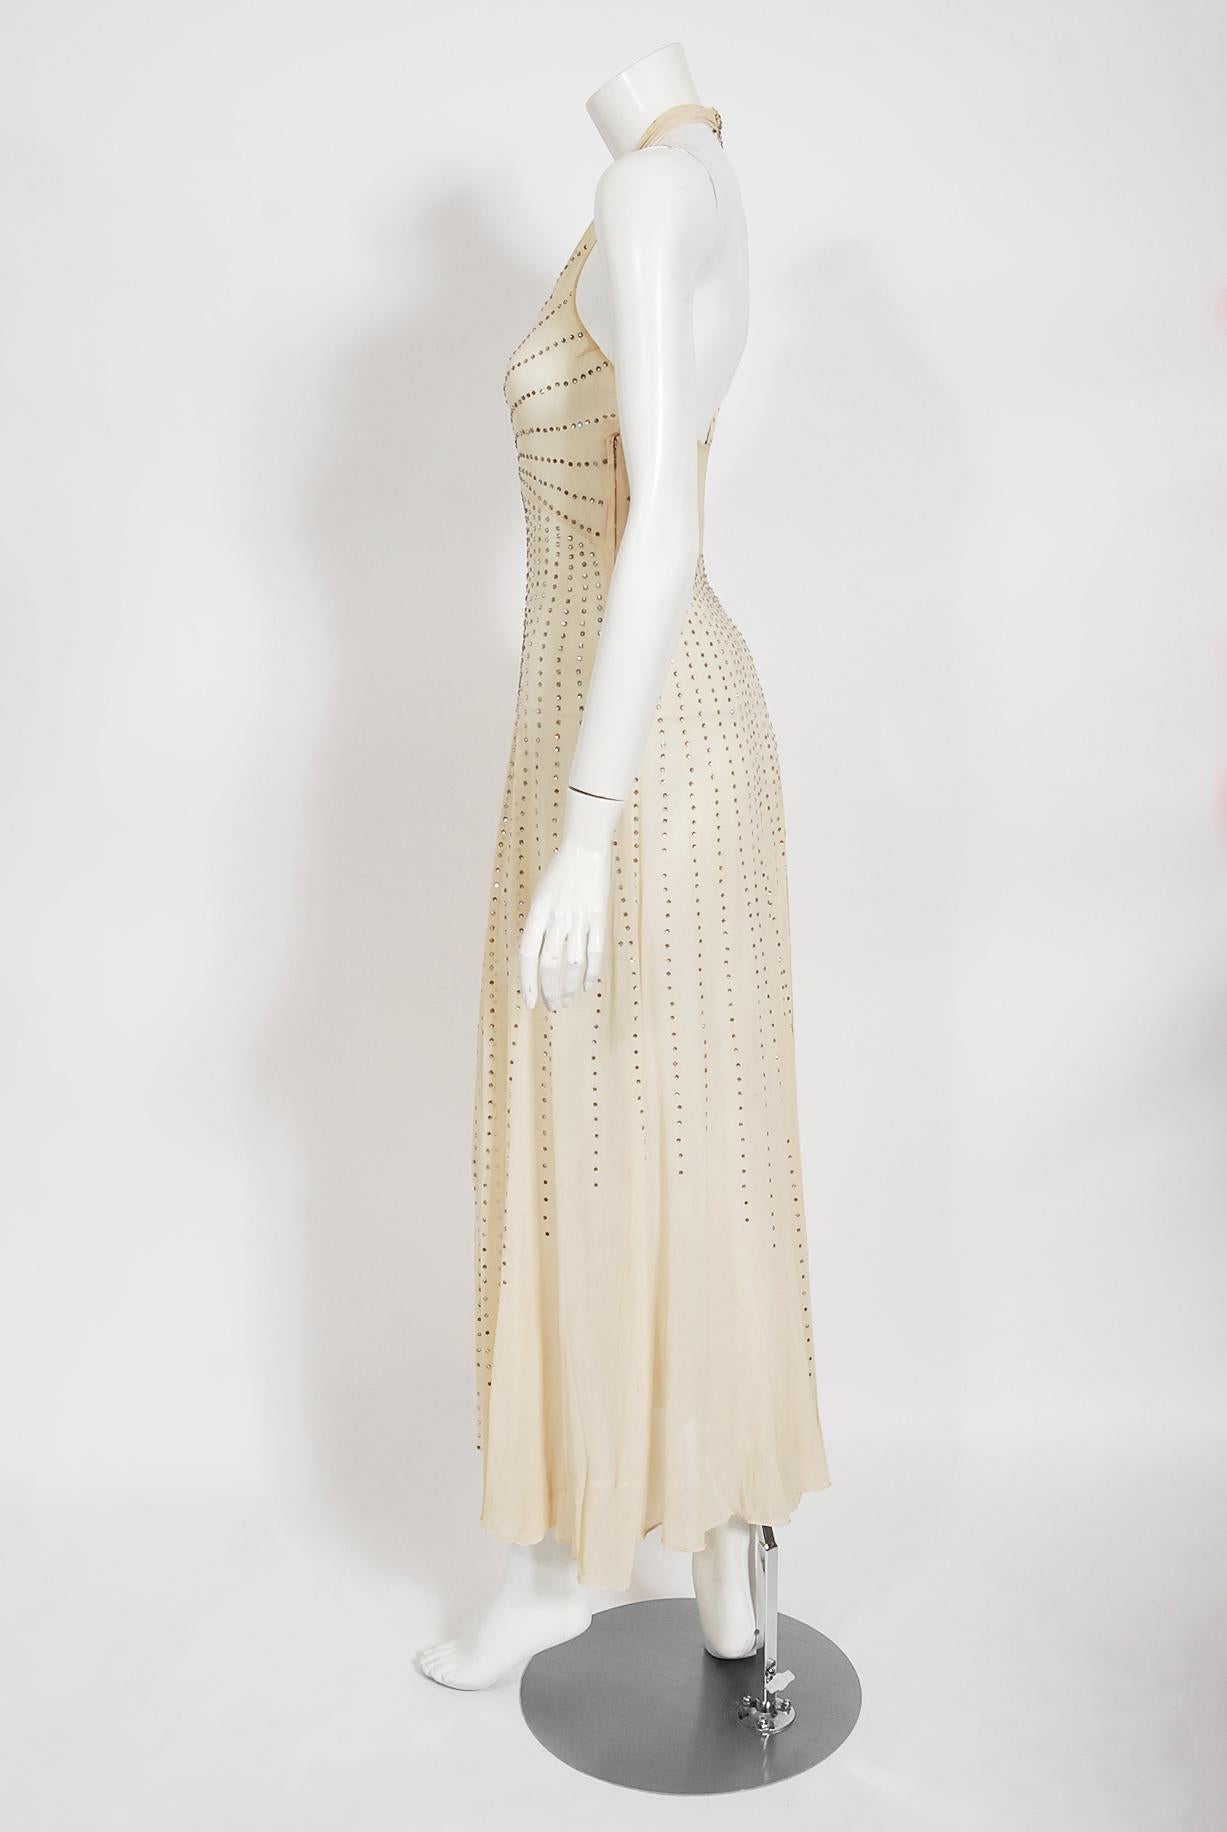 Vintage 1930's Rhinestone Studded Sheer Ivory Chiffon Bias-Cut Halter Dress Gown 1